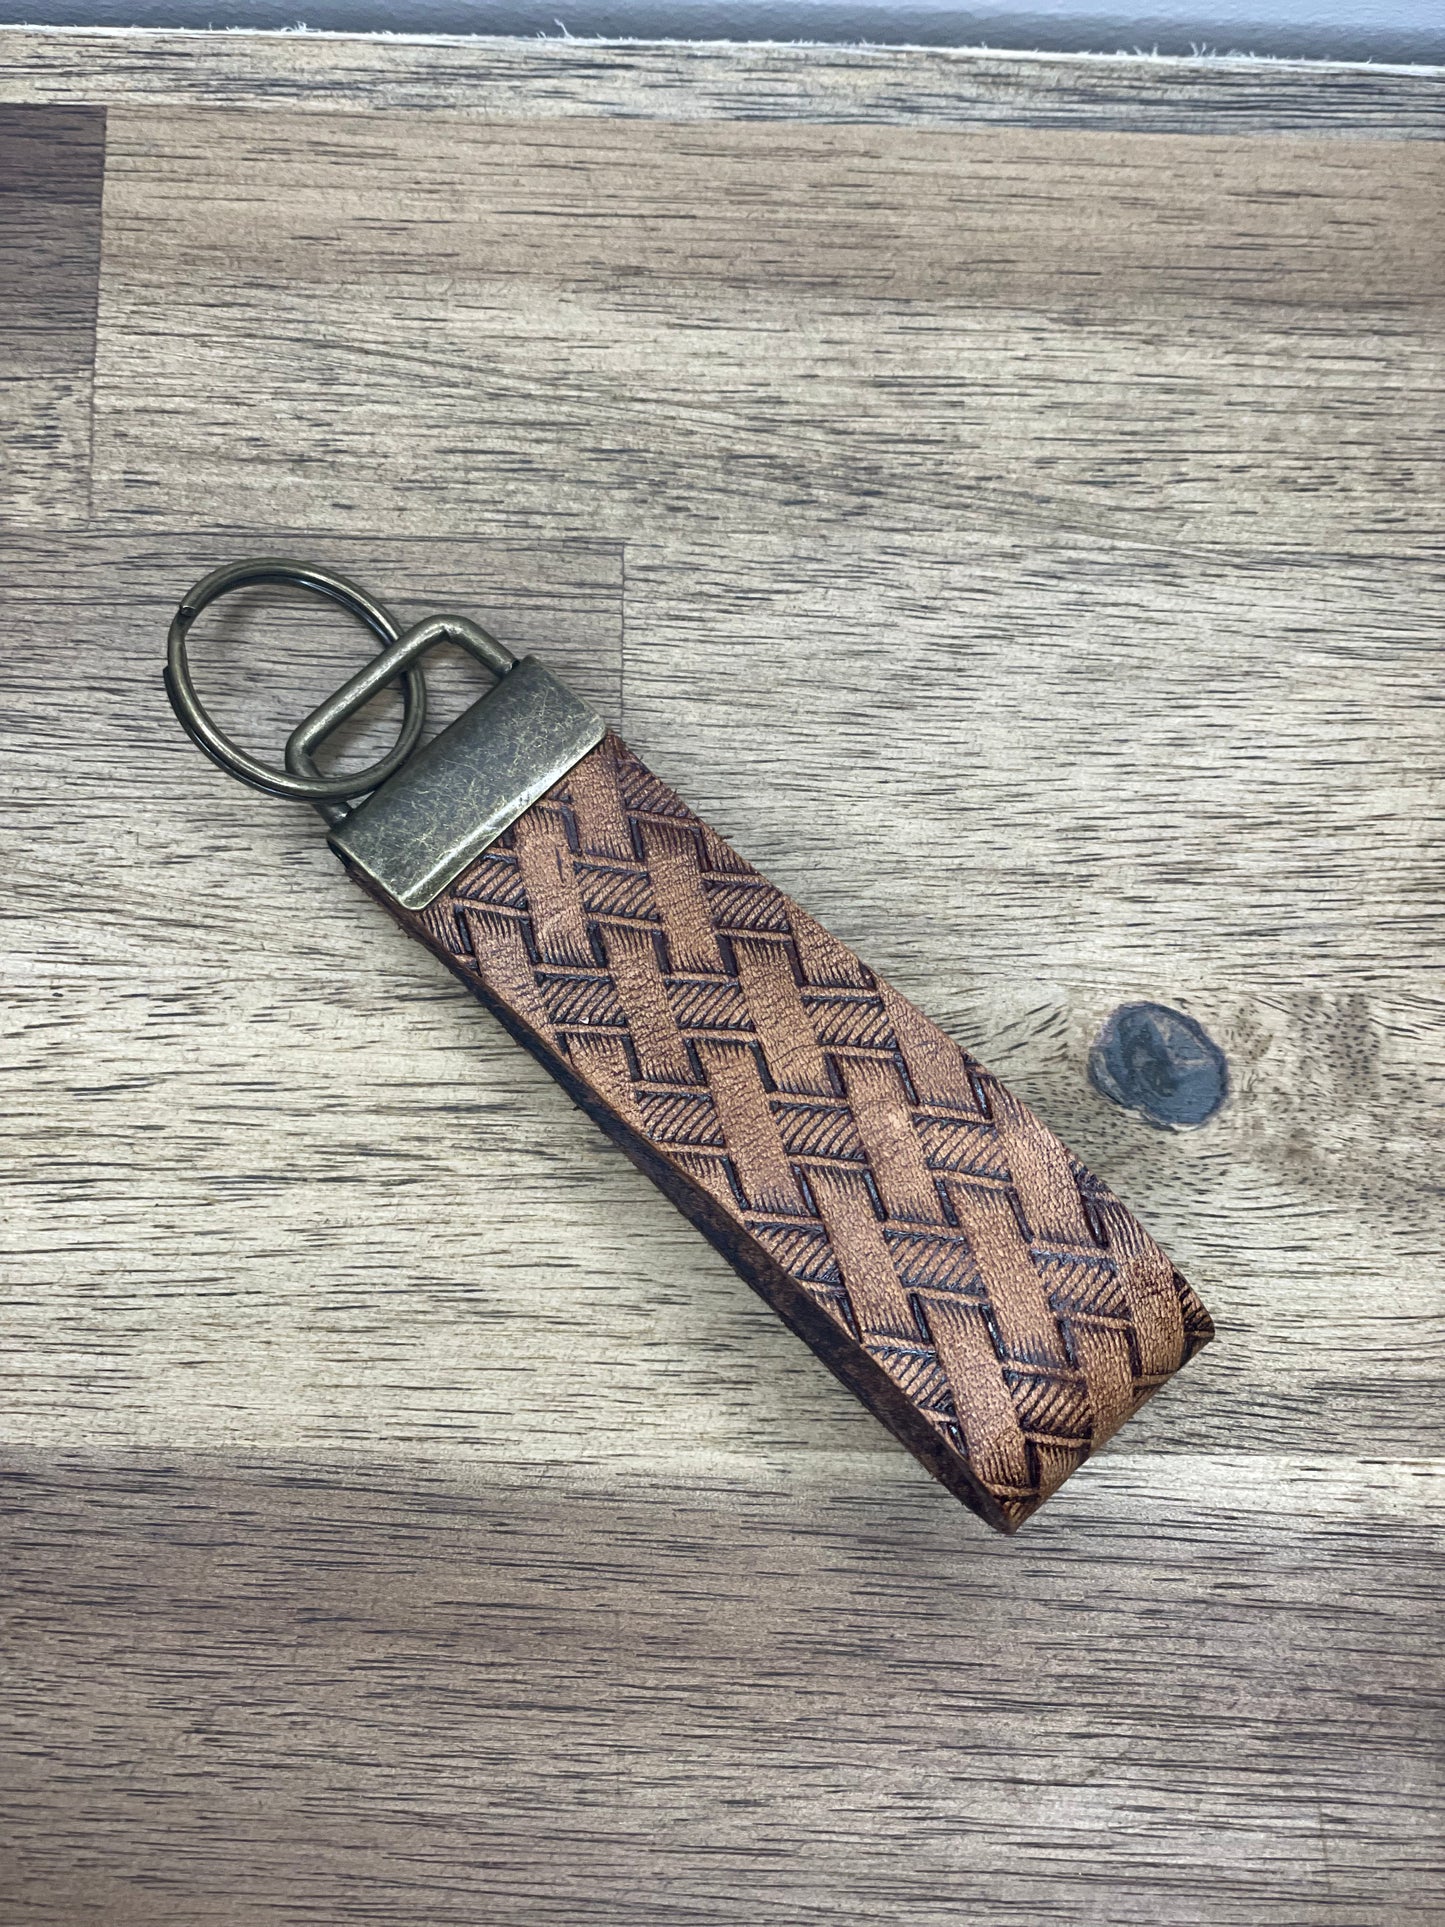 Basket weave tooled leather keychain (medium)